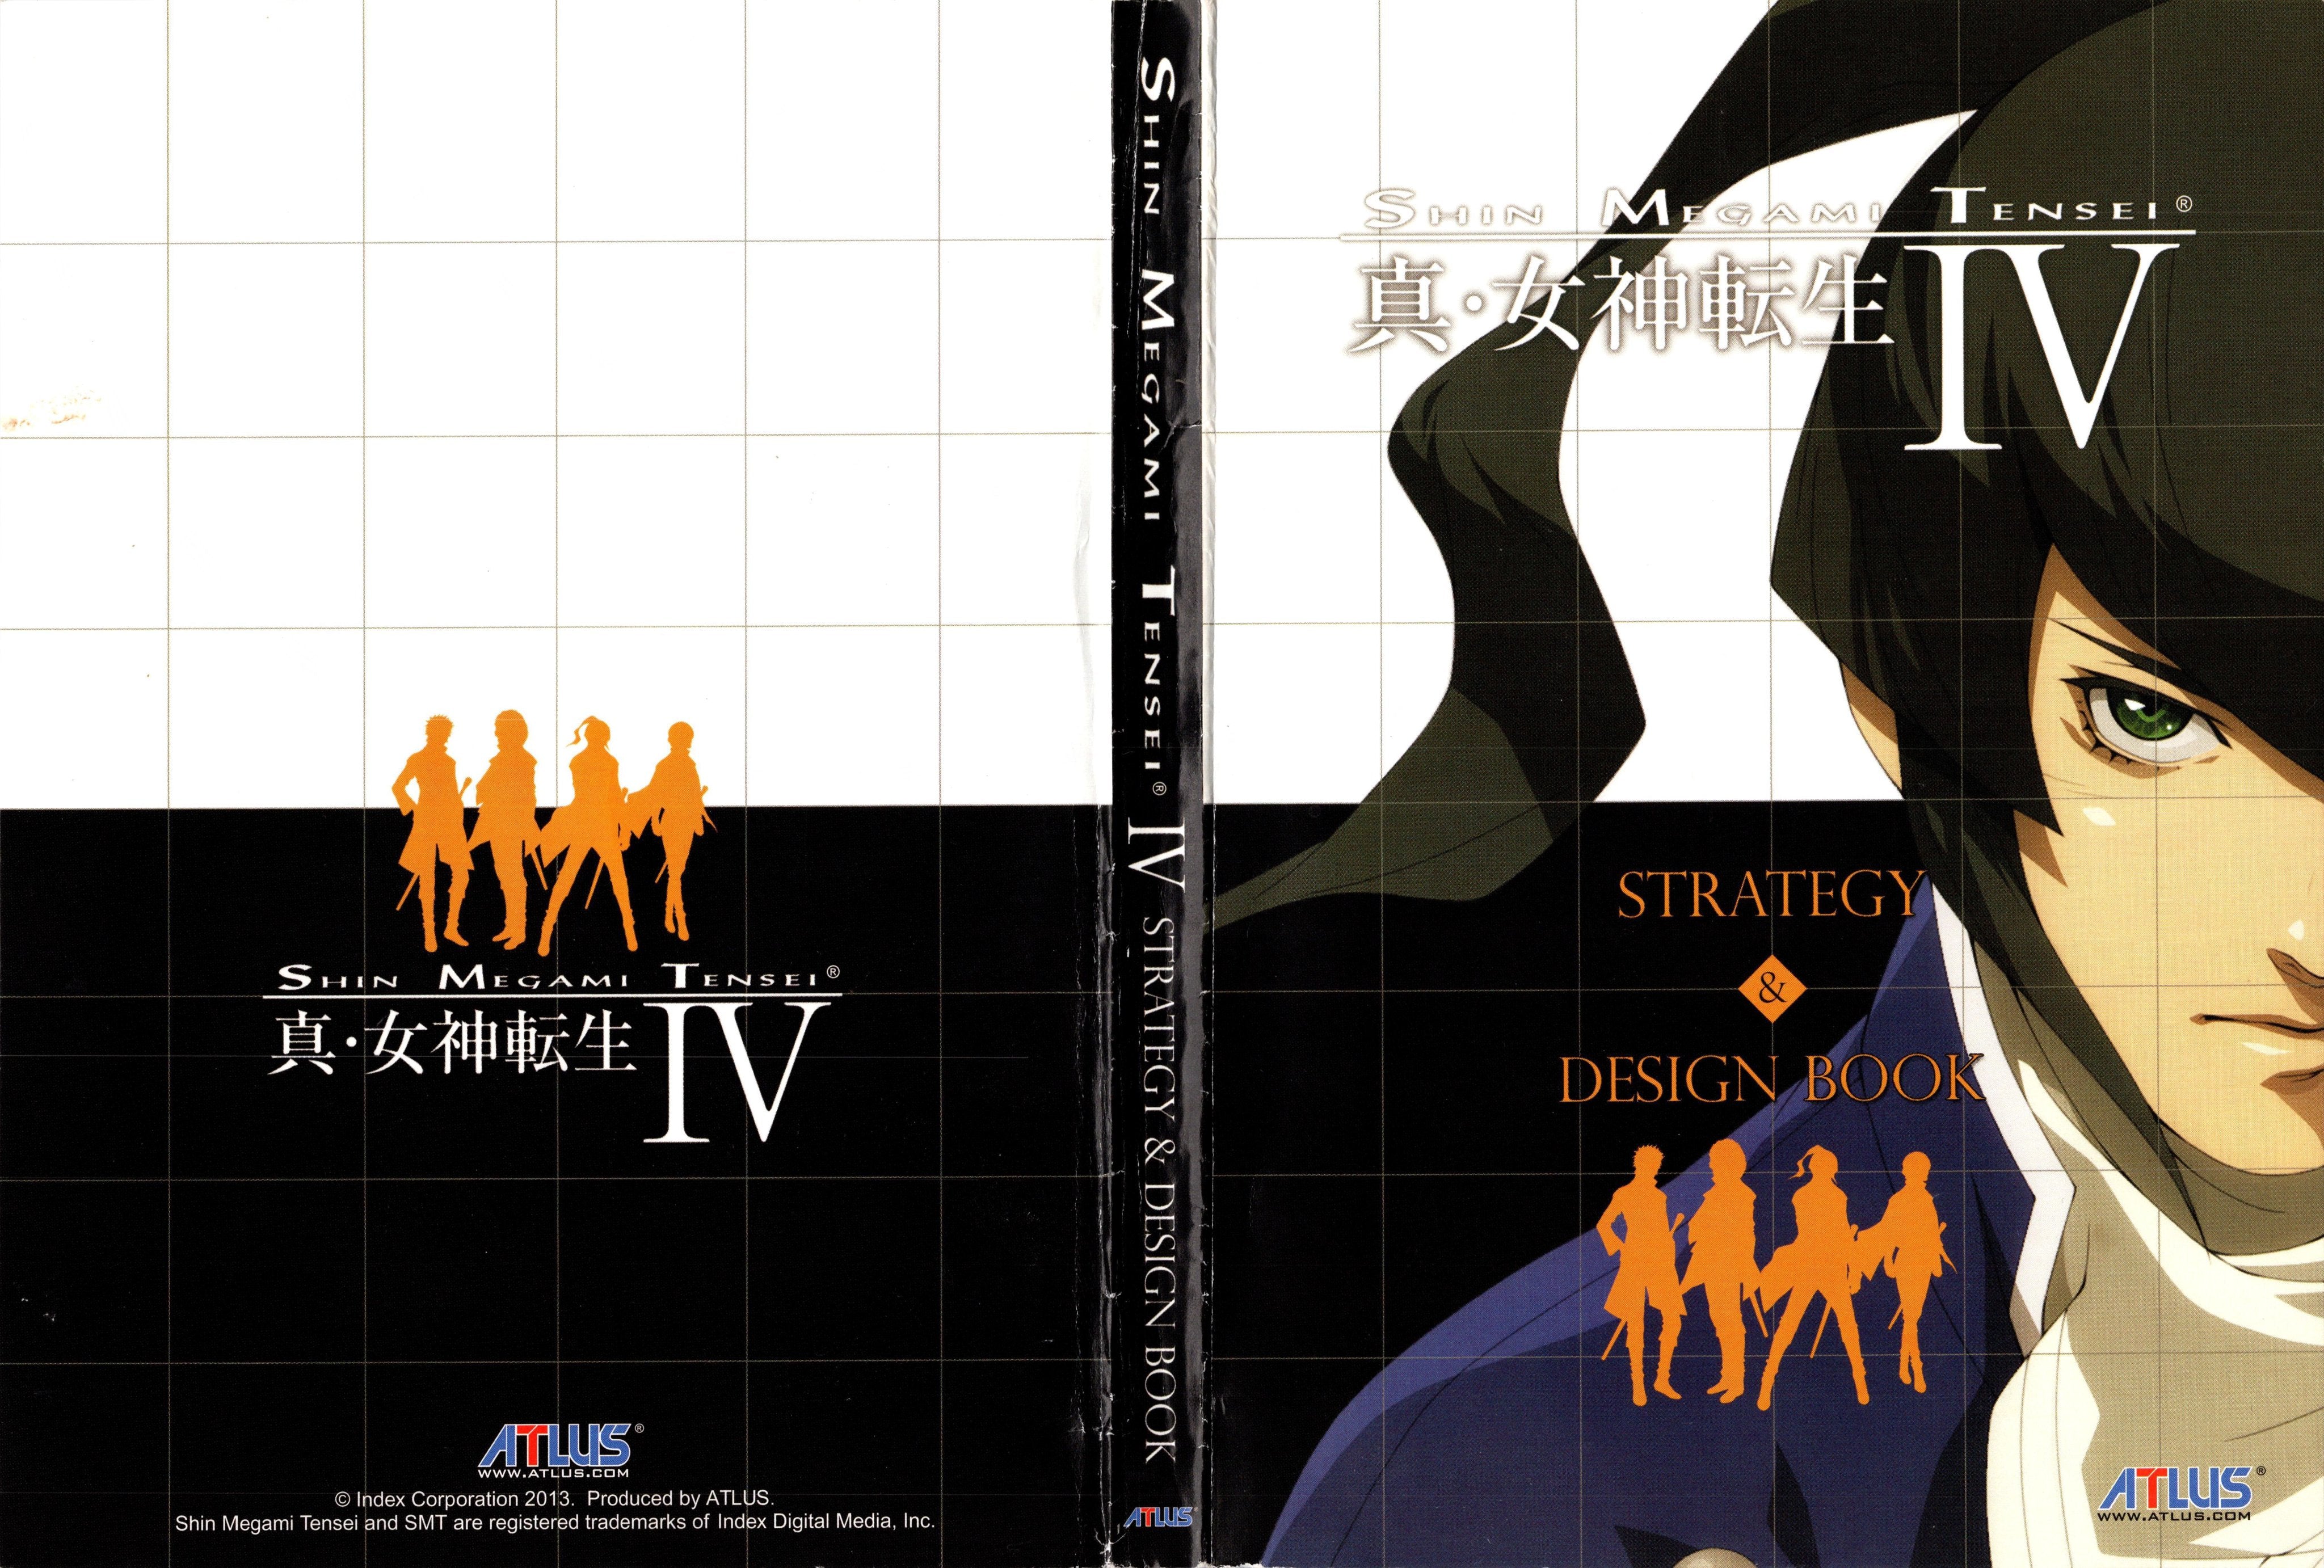 Shin Megami Tensei IV Strategy Design Book - King Gaming 